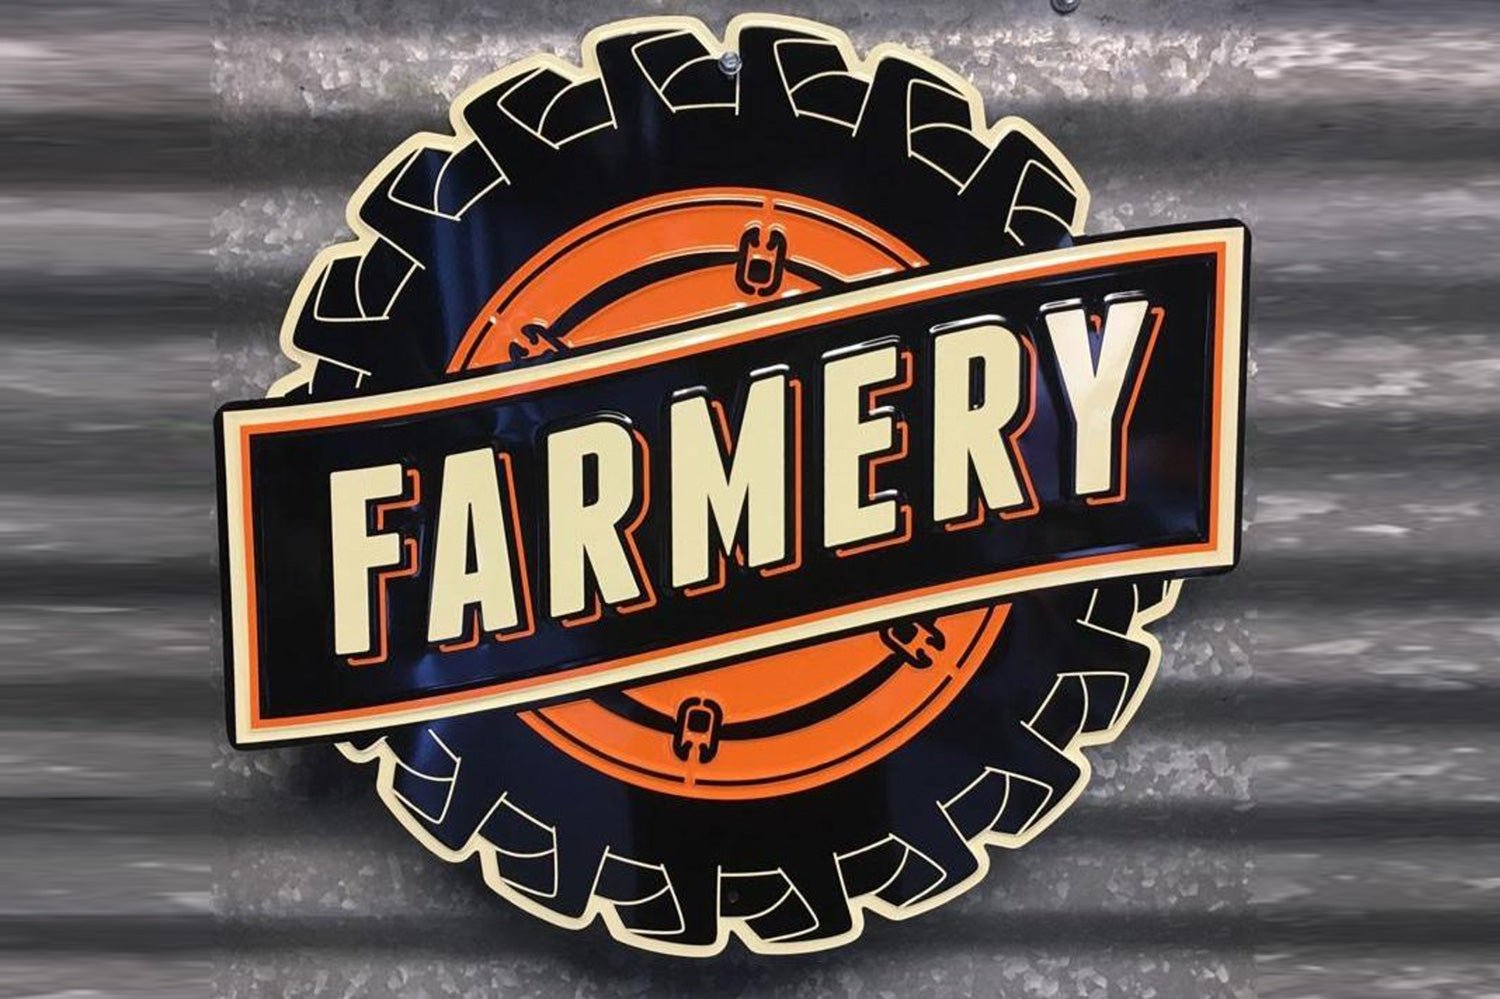 Collectibles - Farmery Estate Brewing Company Inc.